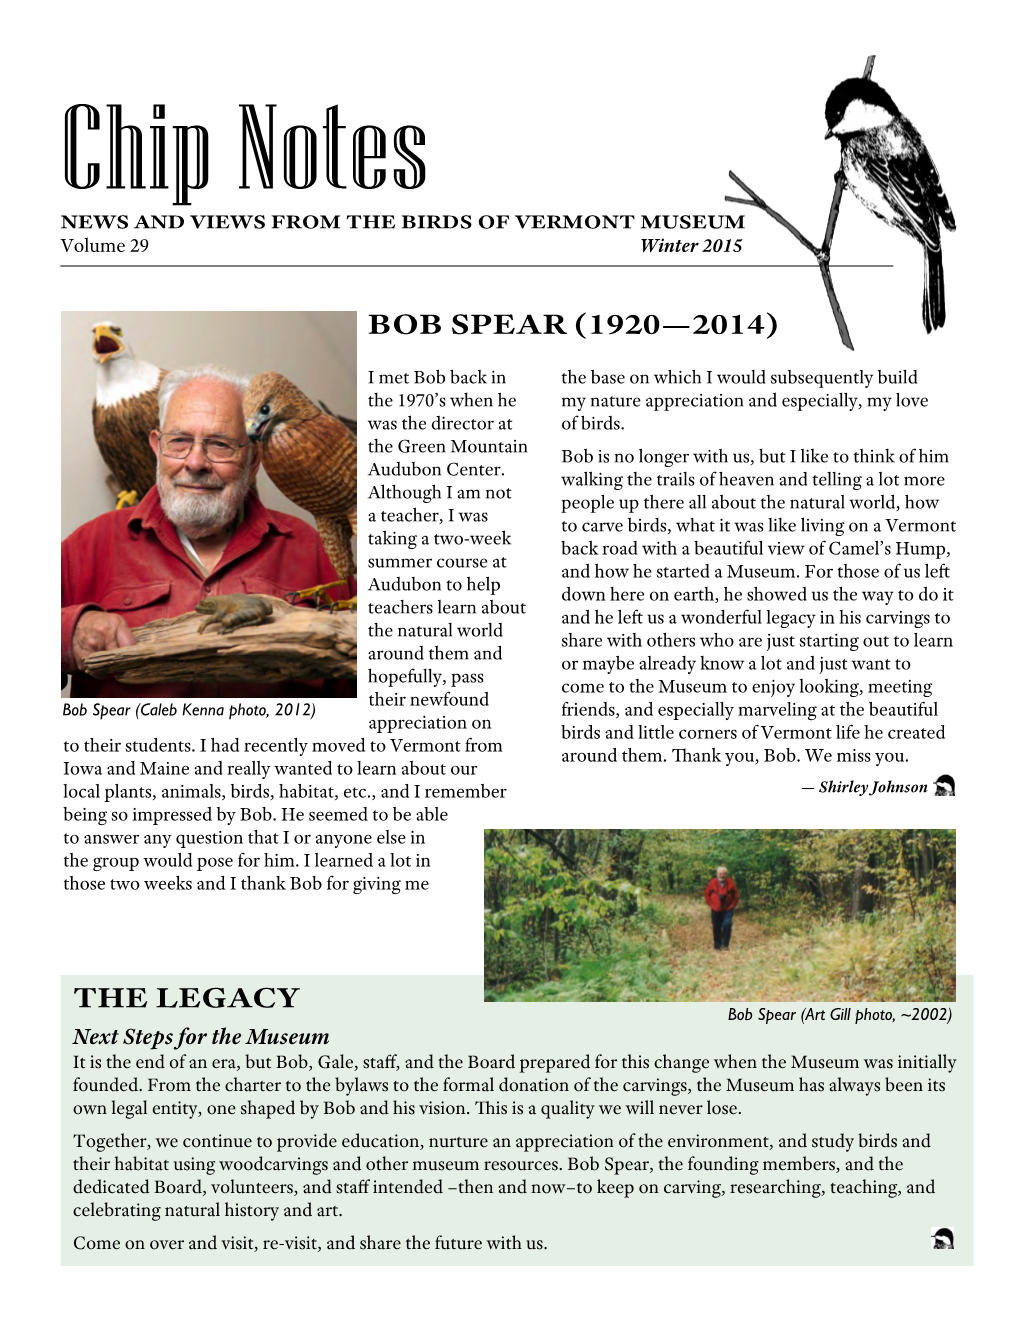 Bob Spear (1920—2014) the Legacy